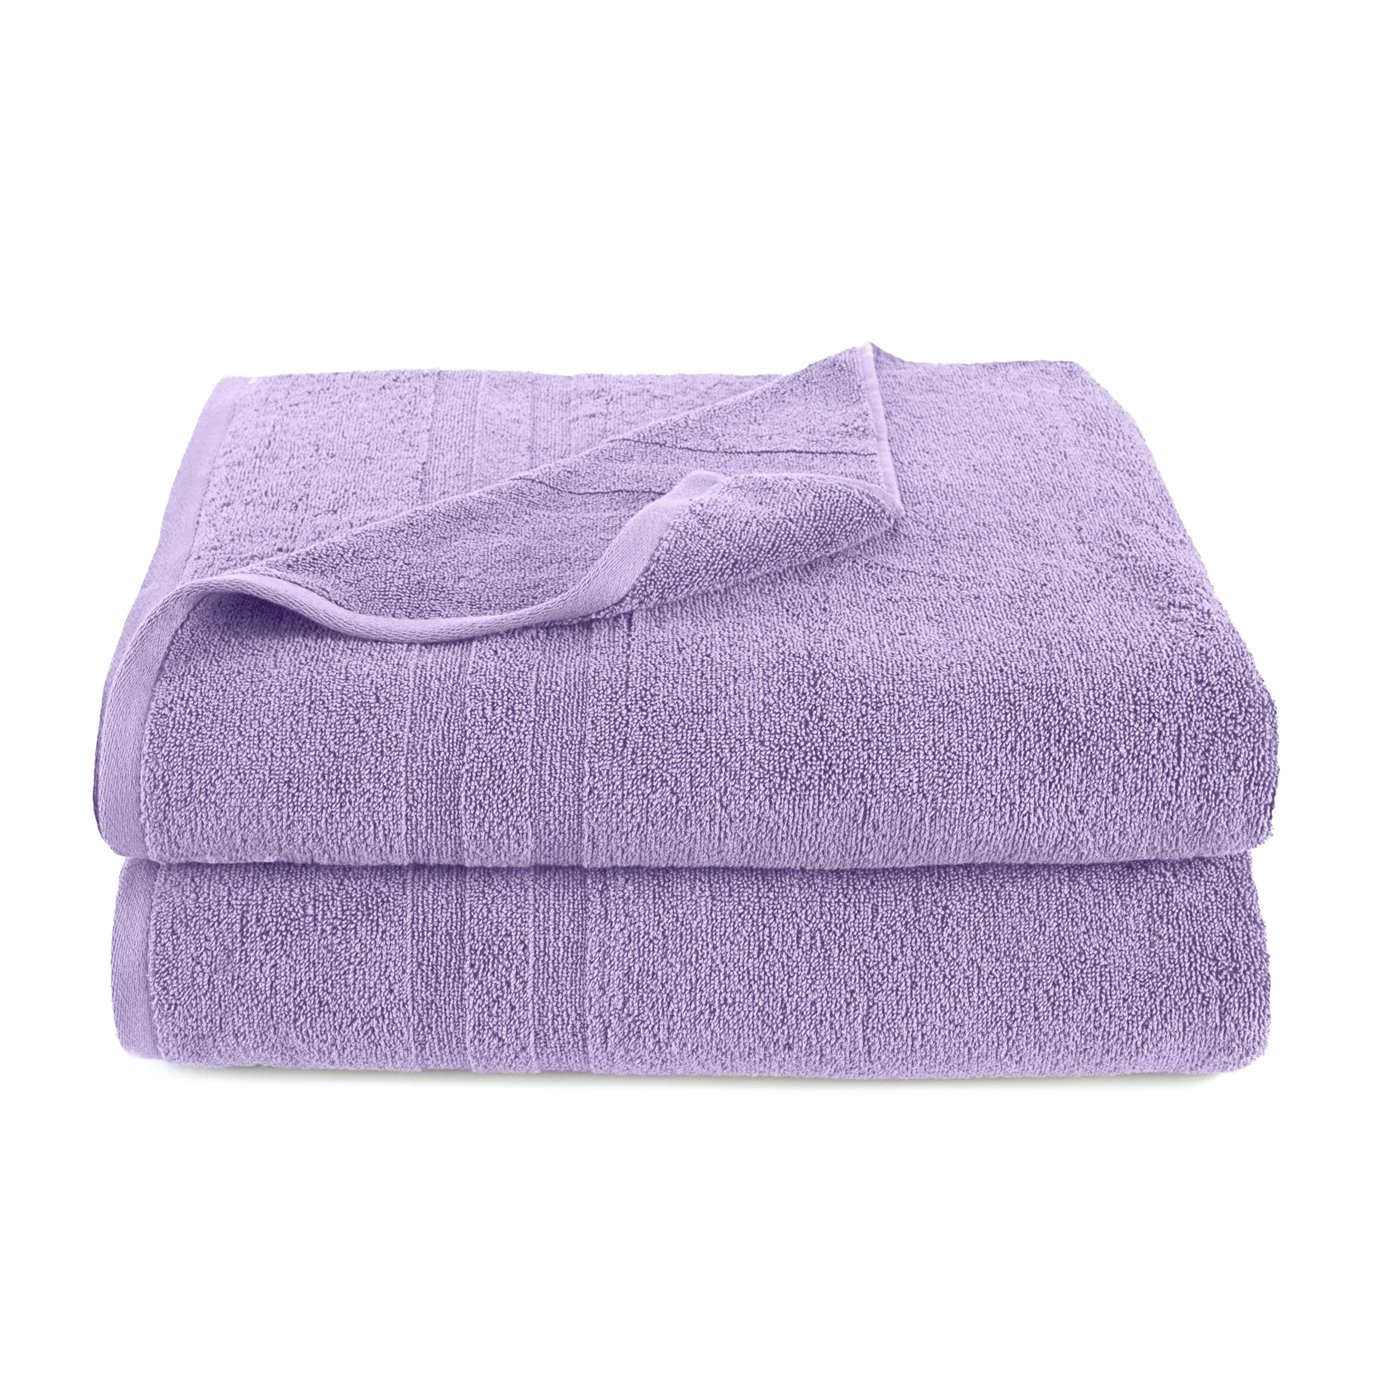 Martex Purity 2-Piece Lilac Bath Sheet Set